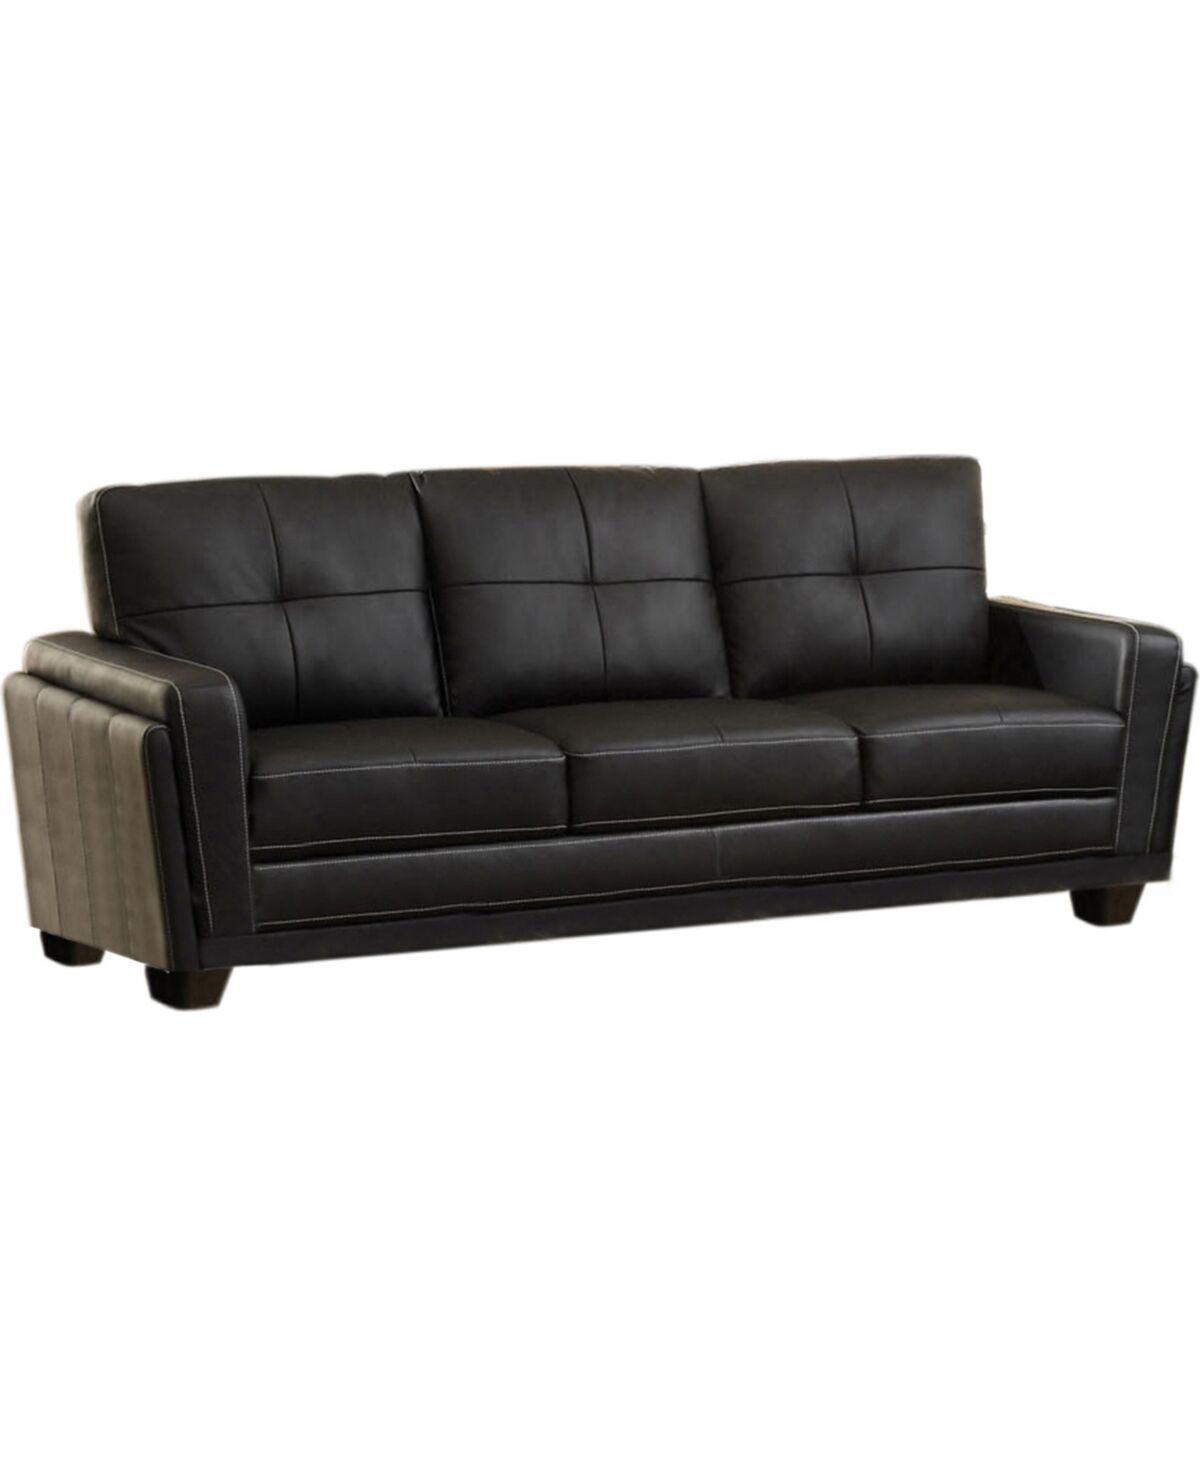 Furniture Of America Casmir Upholstered Sofa - Black